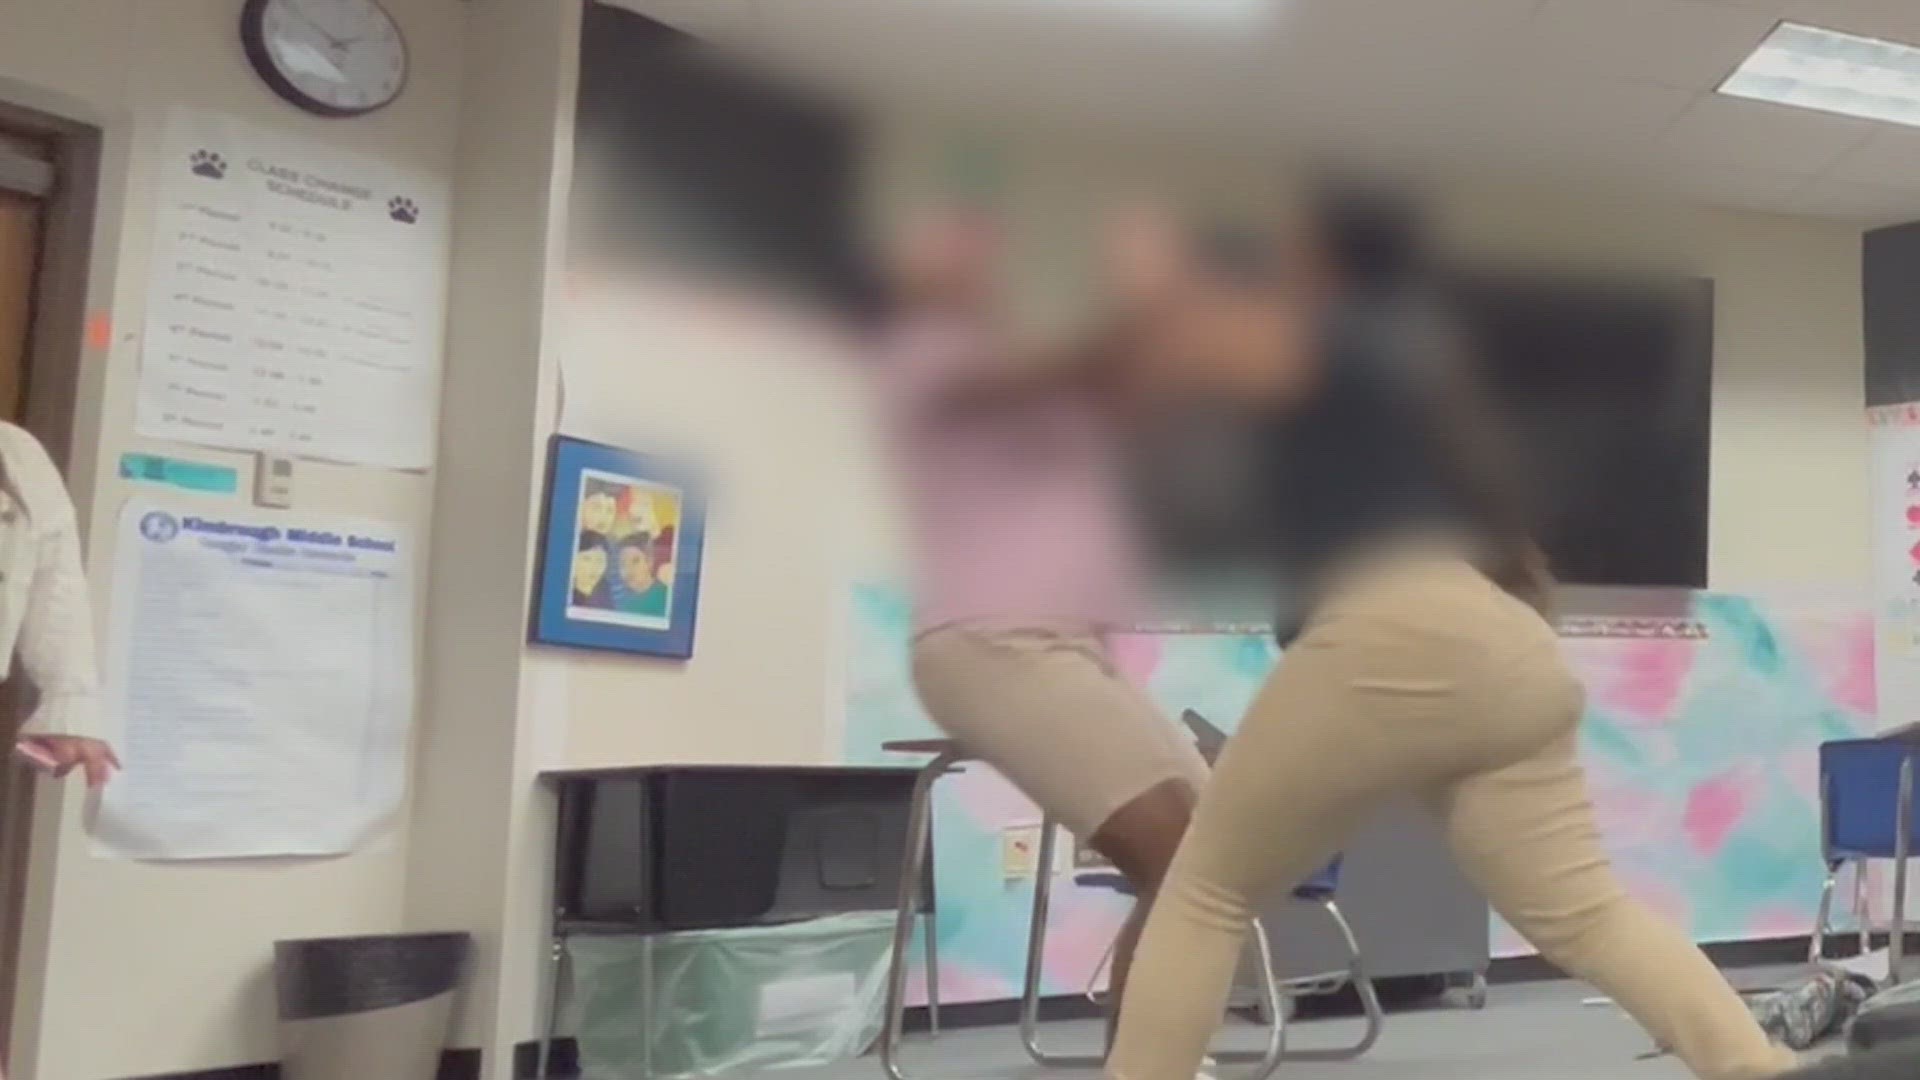 Teacher After Class - Texas teacher who allegedly allowed fights in class arrested | wfaa.com